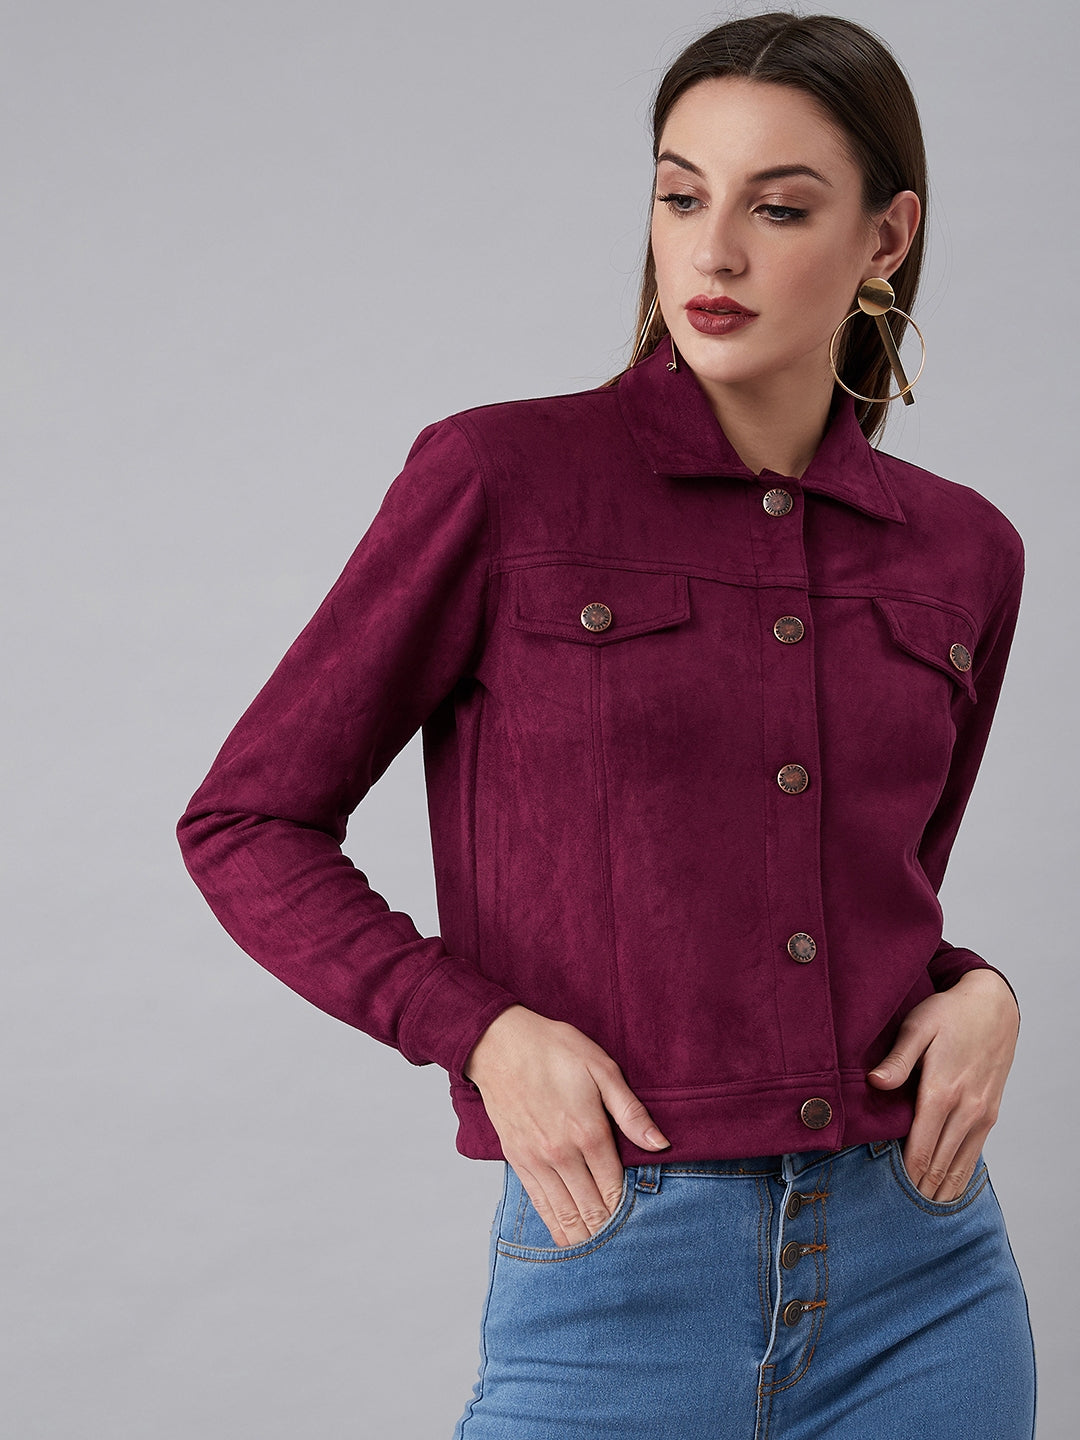 Athena Women Burgundy Solid Tailored Suede Jacket - Athena Lifestyle